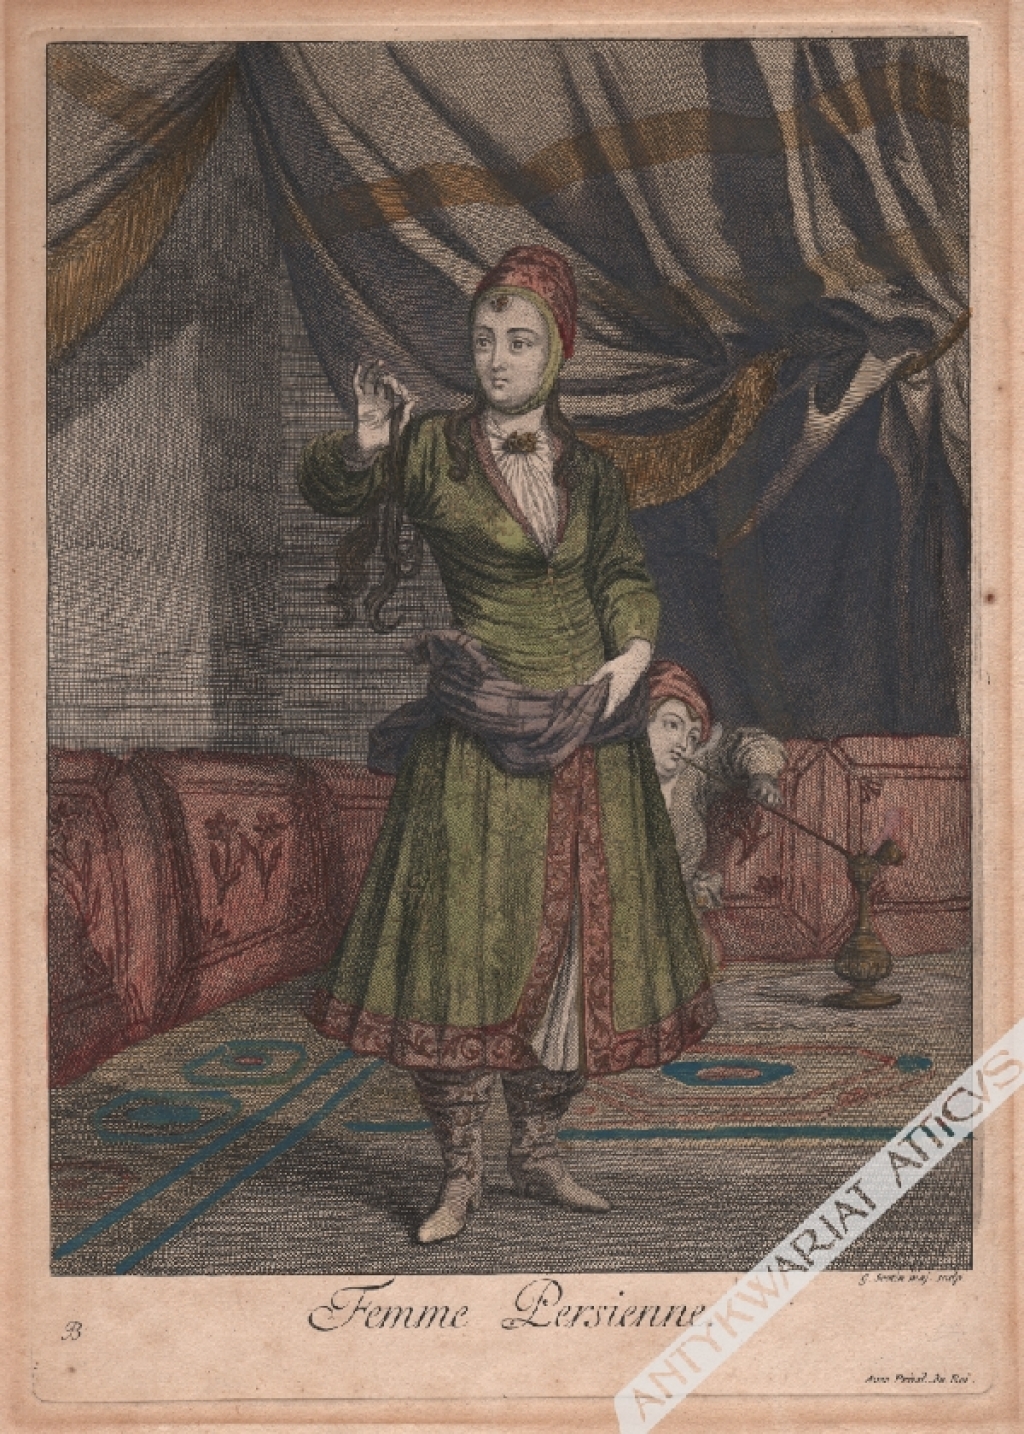 [rycina, 1714] Femme Persienne [Persjanka]